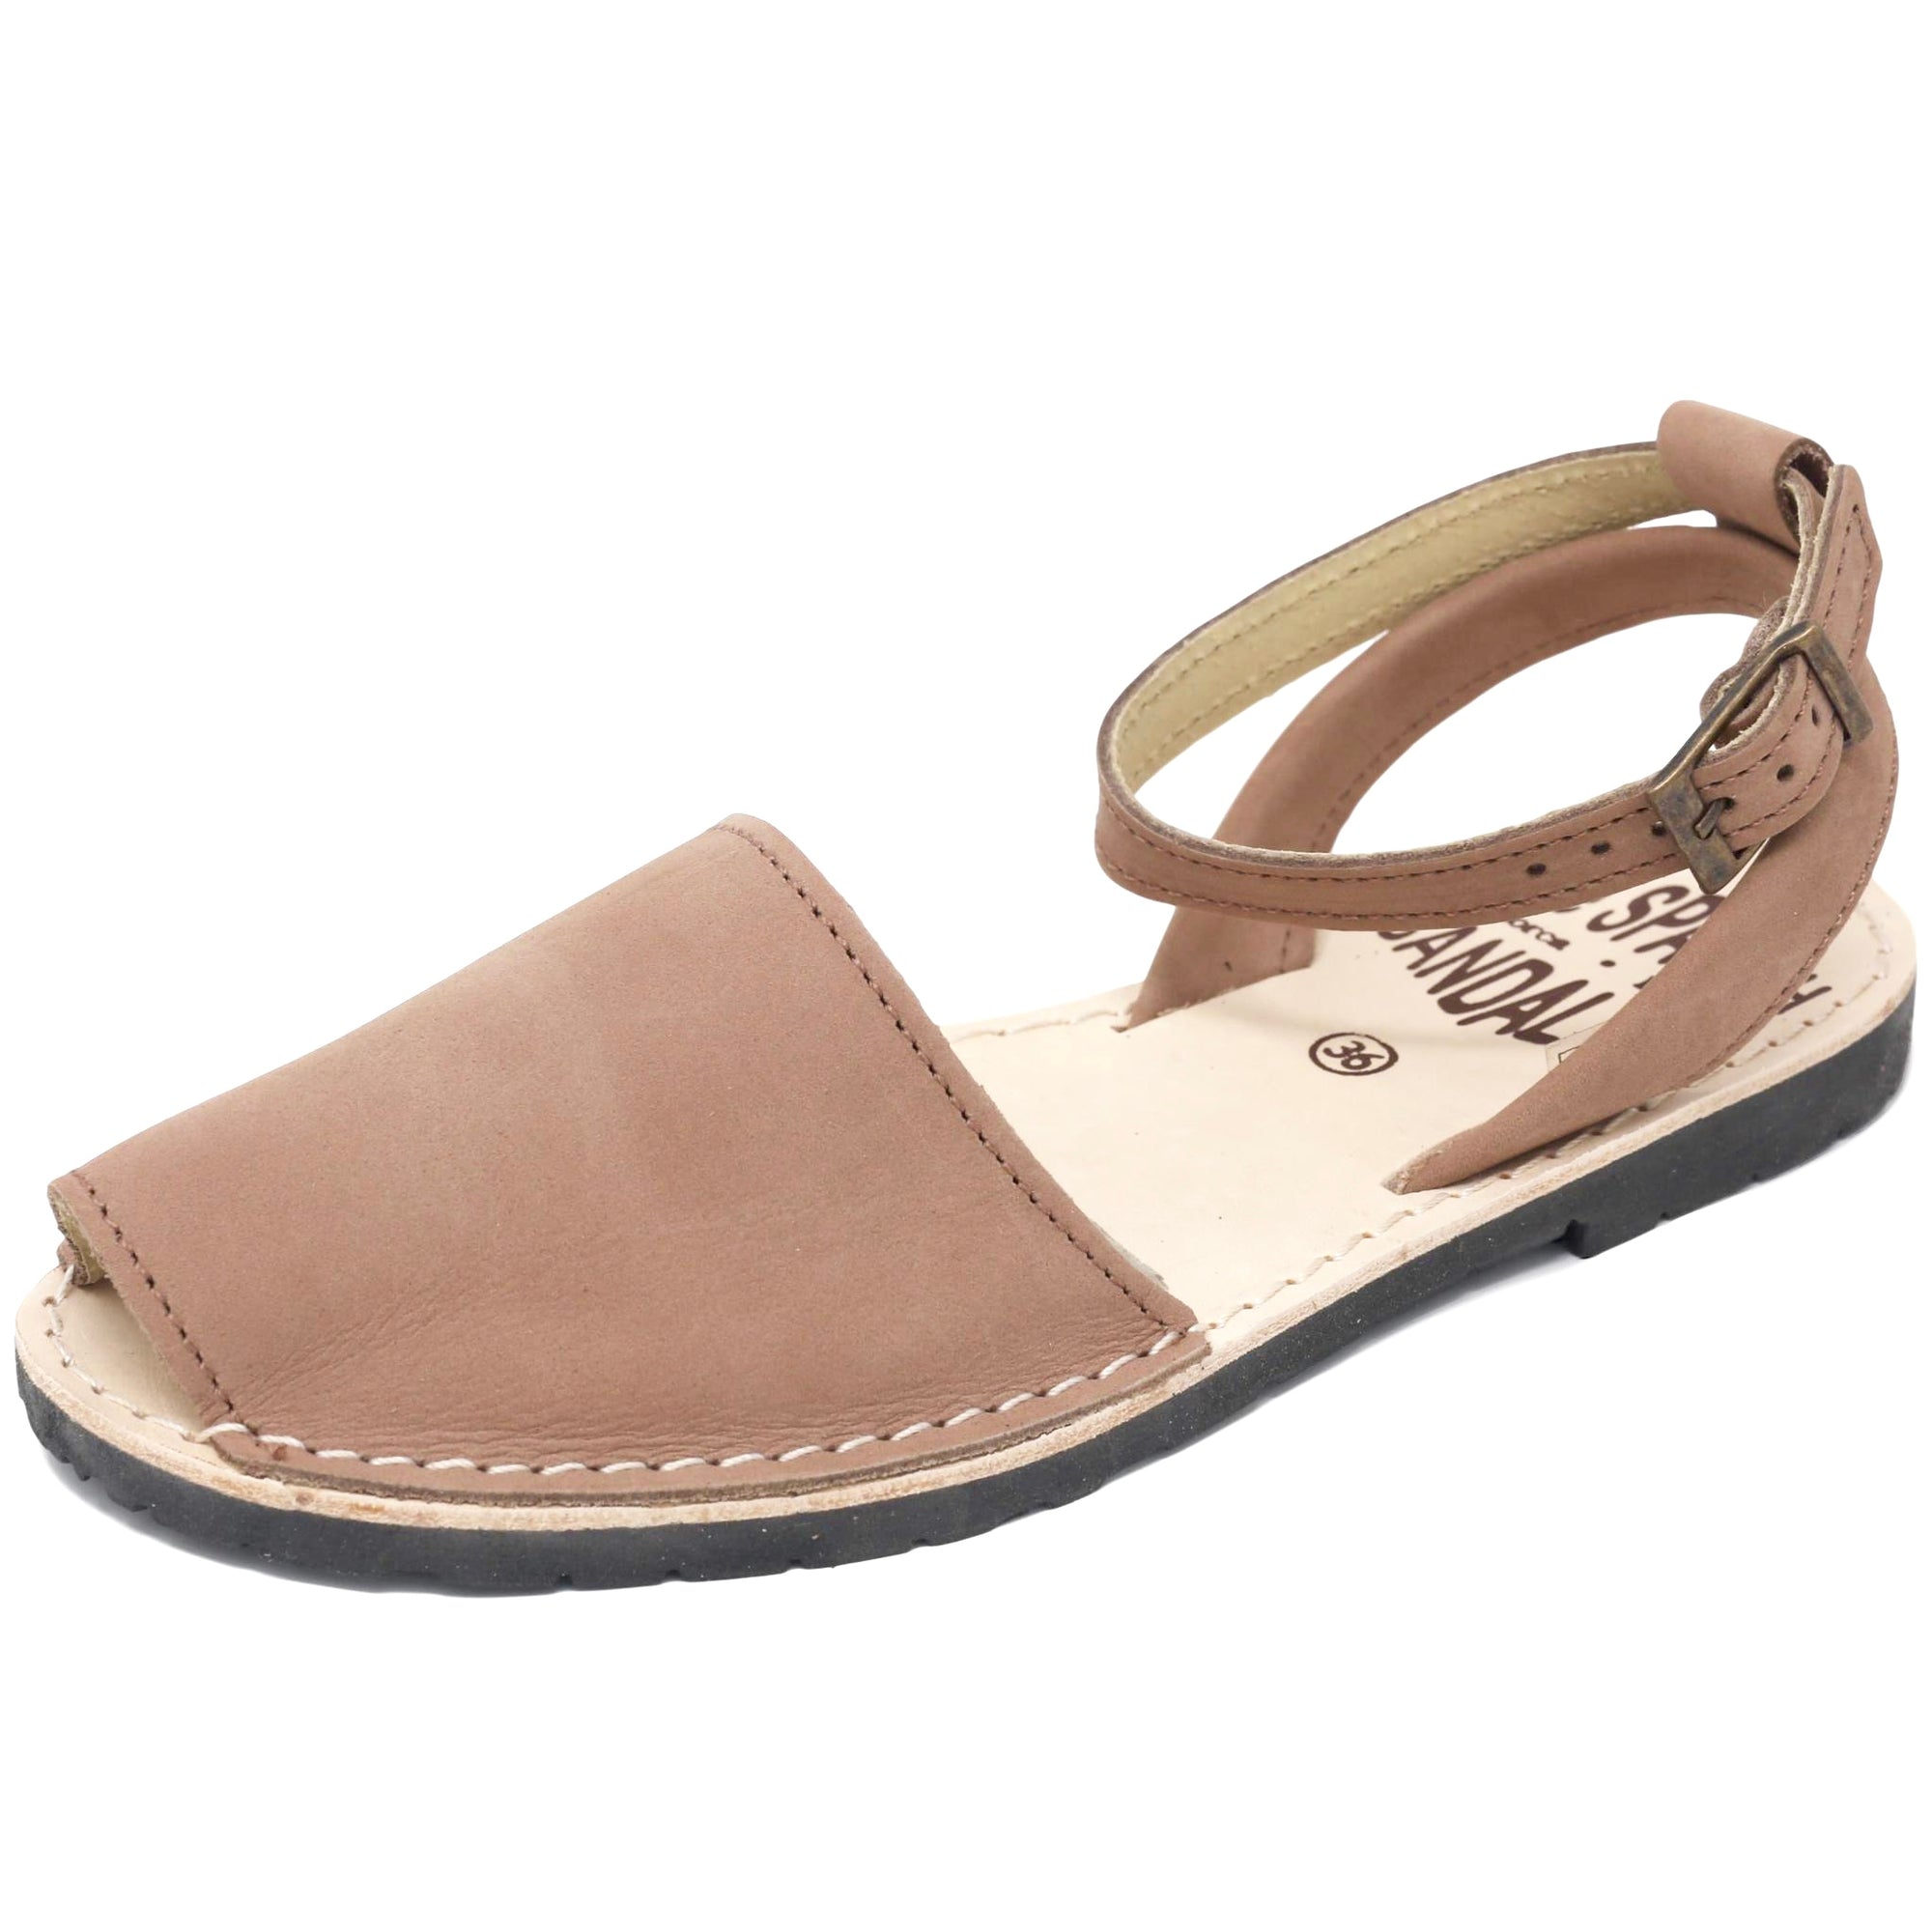 Tan nubuck sandals with strap - diagonal view